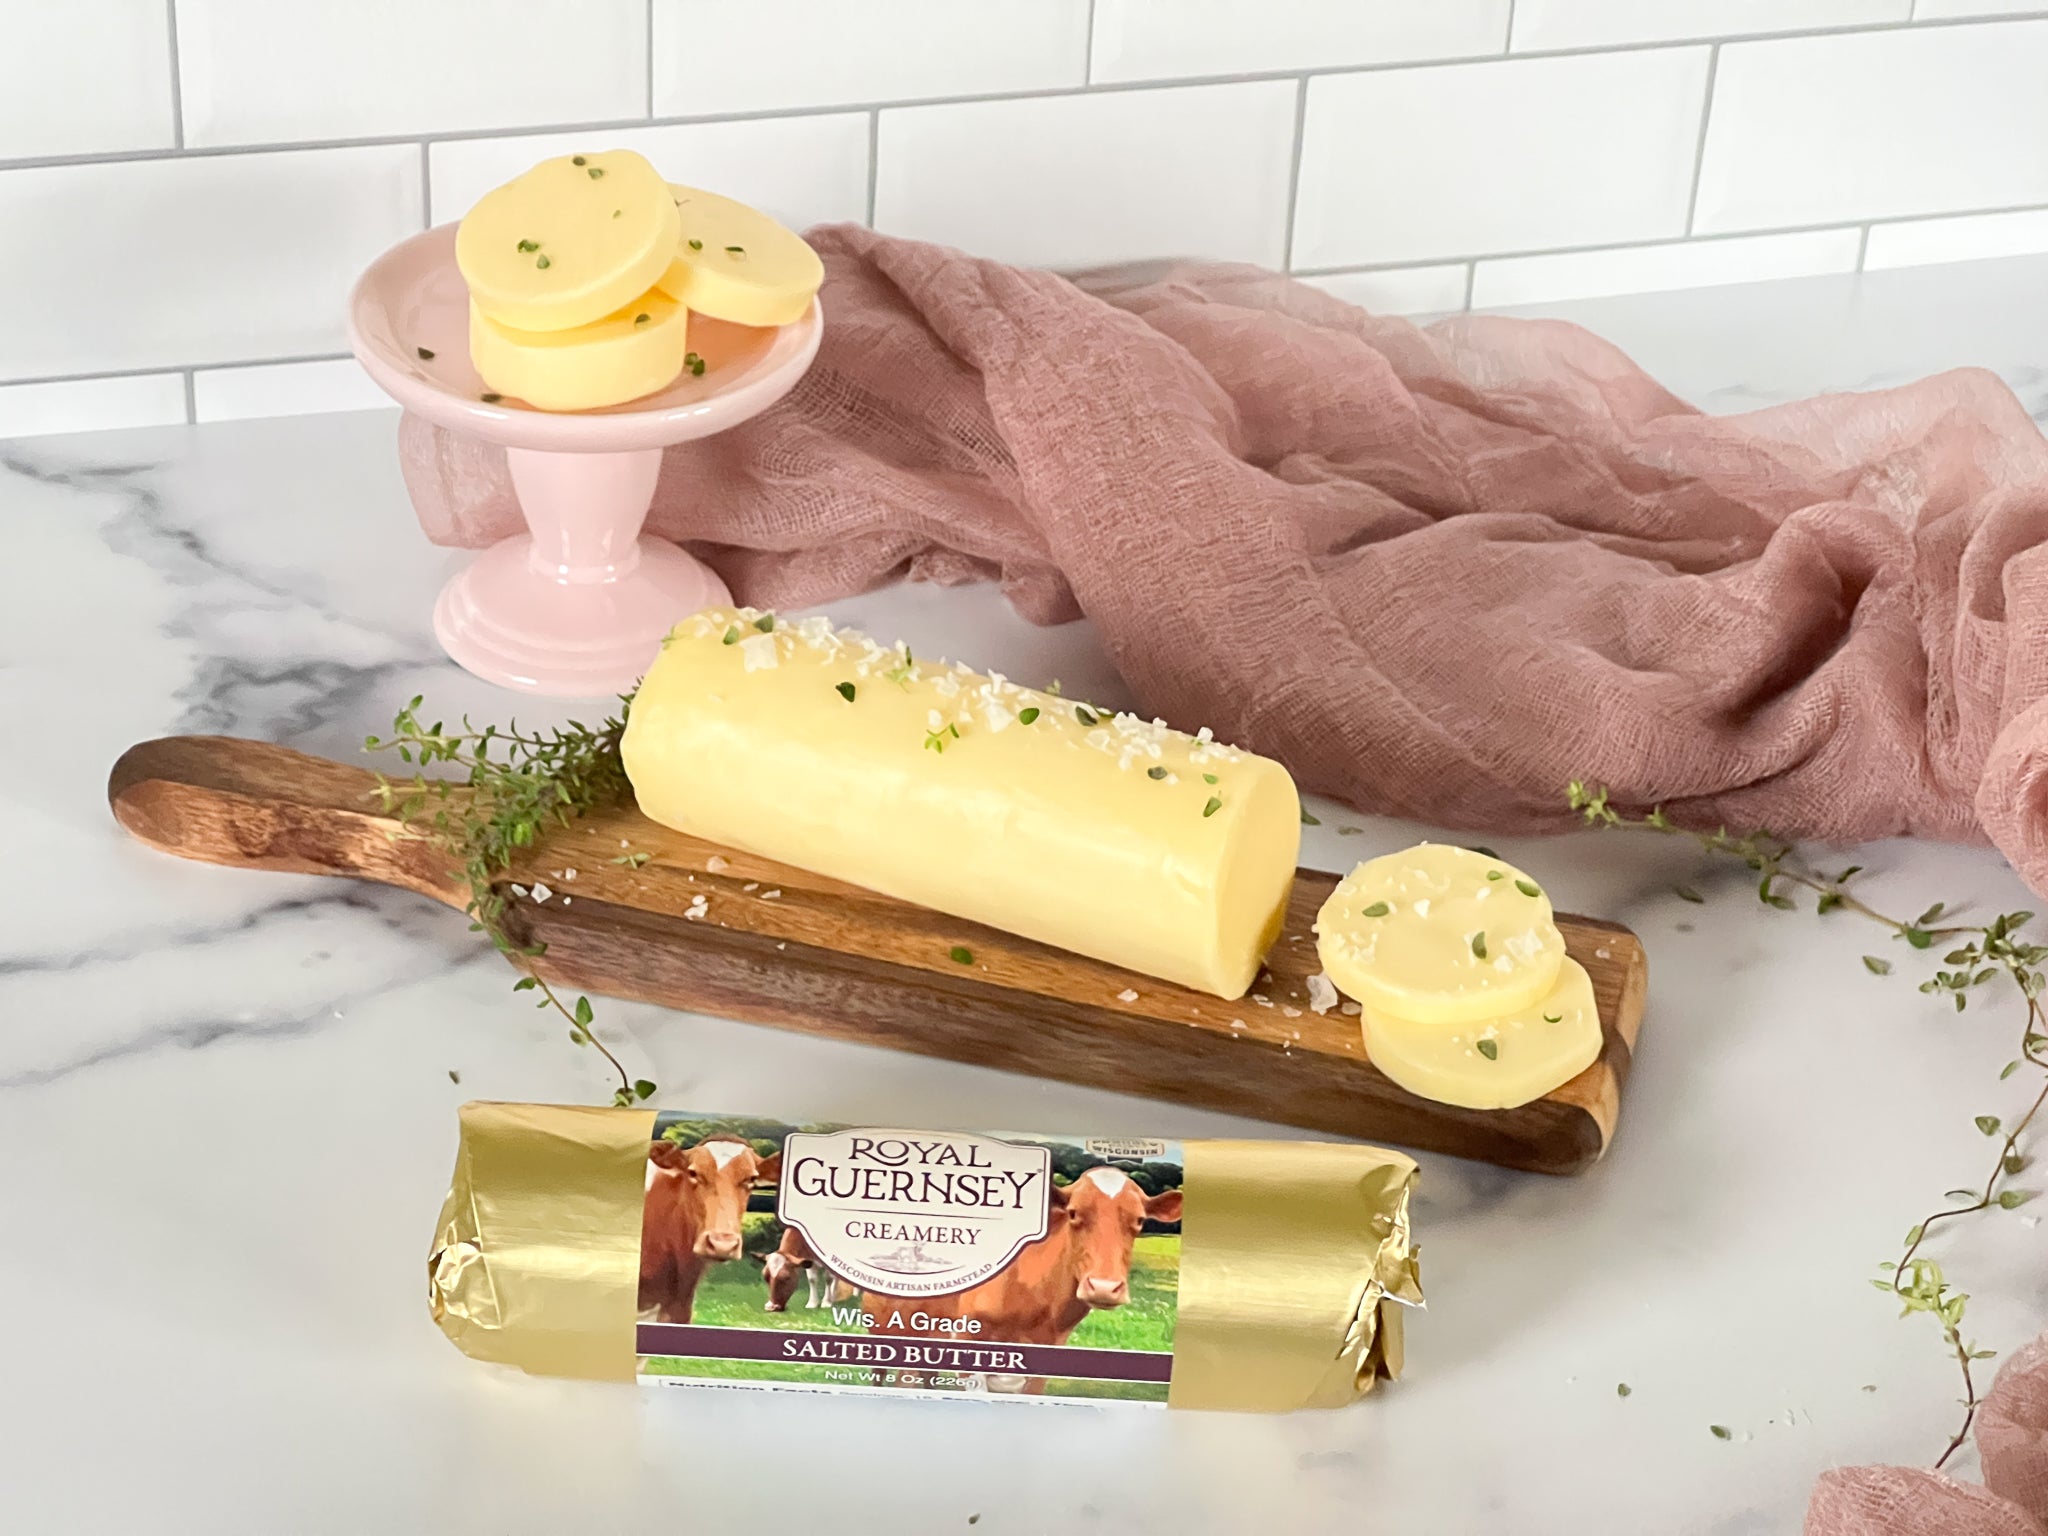 Royal Guernsey artisan farmstead butter